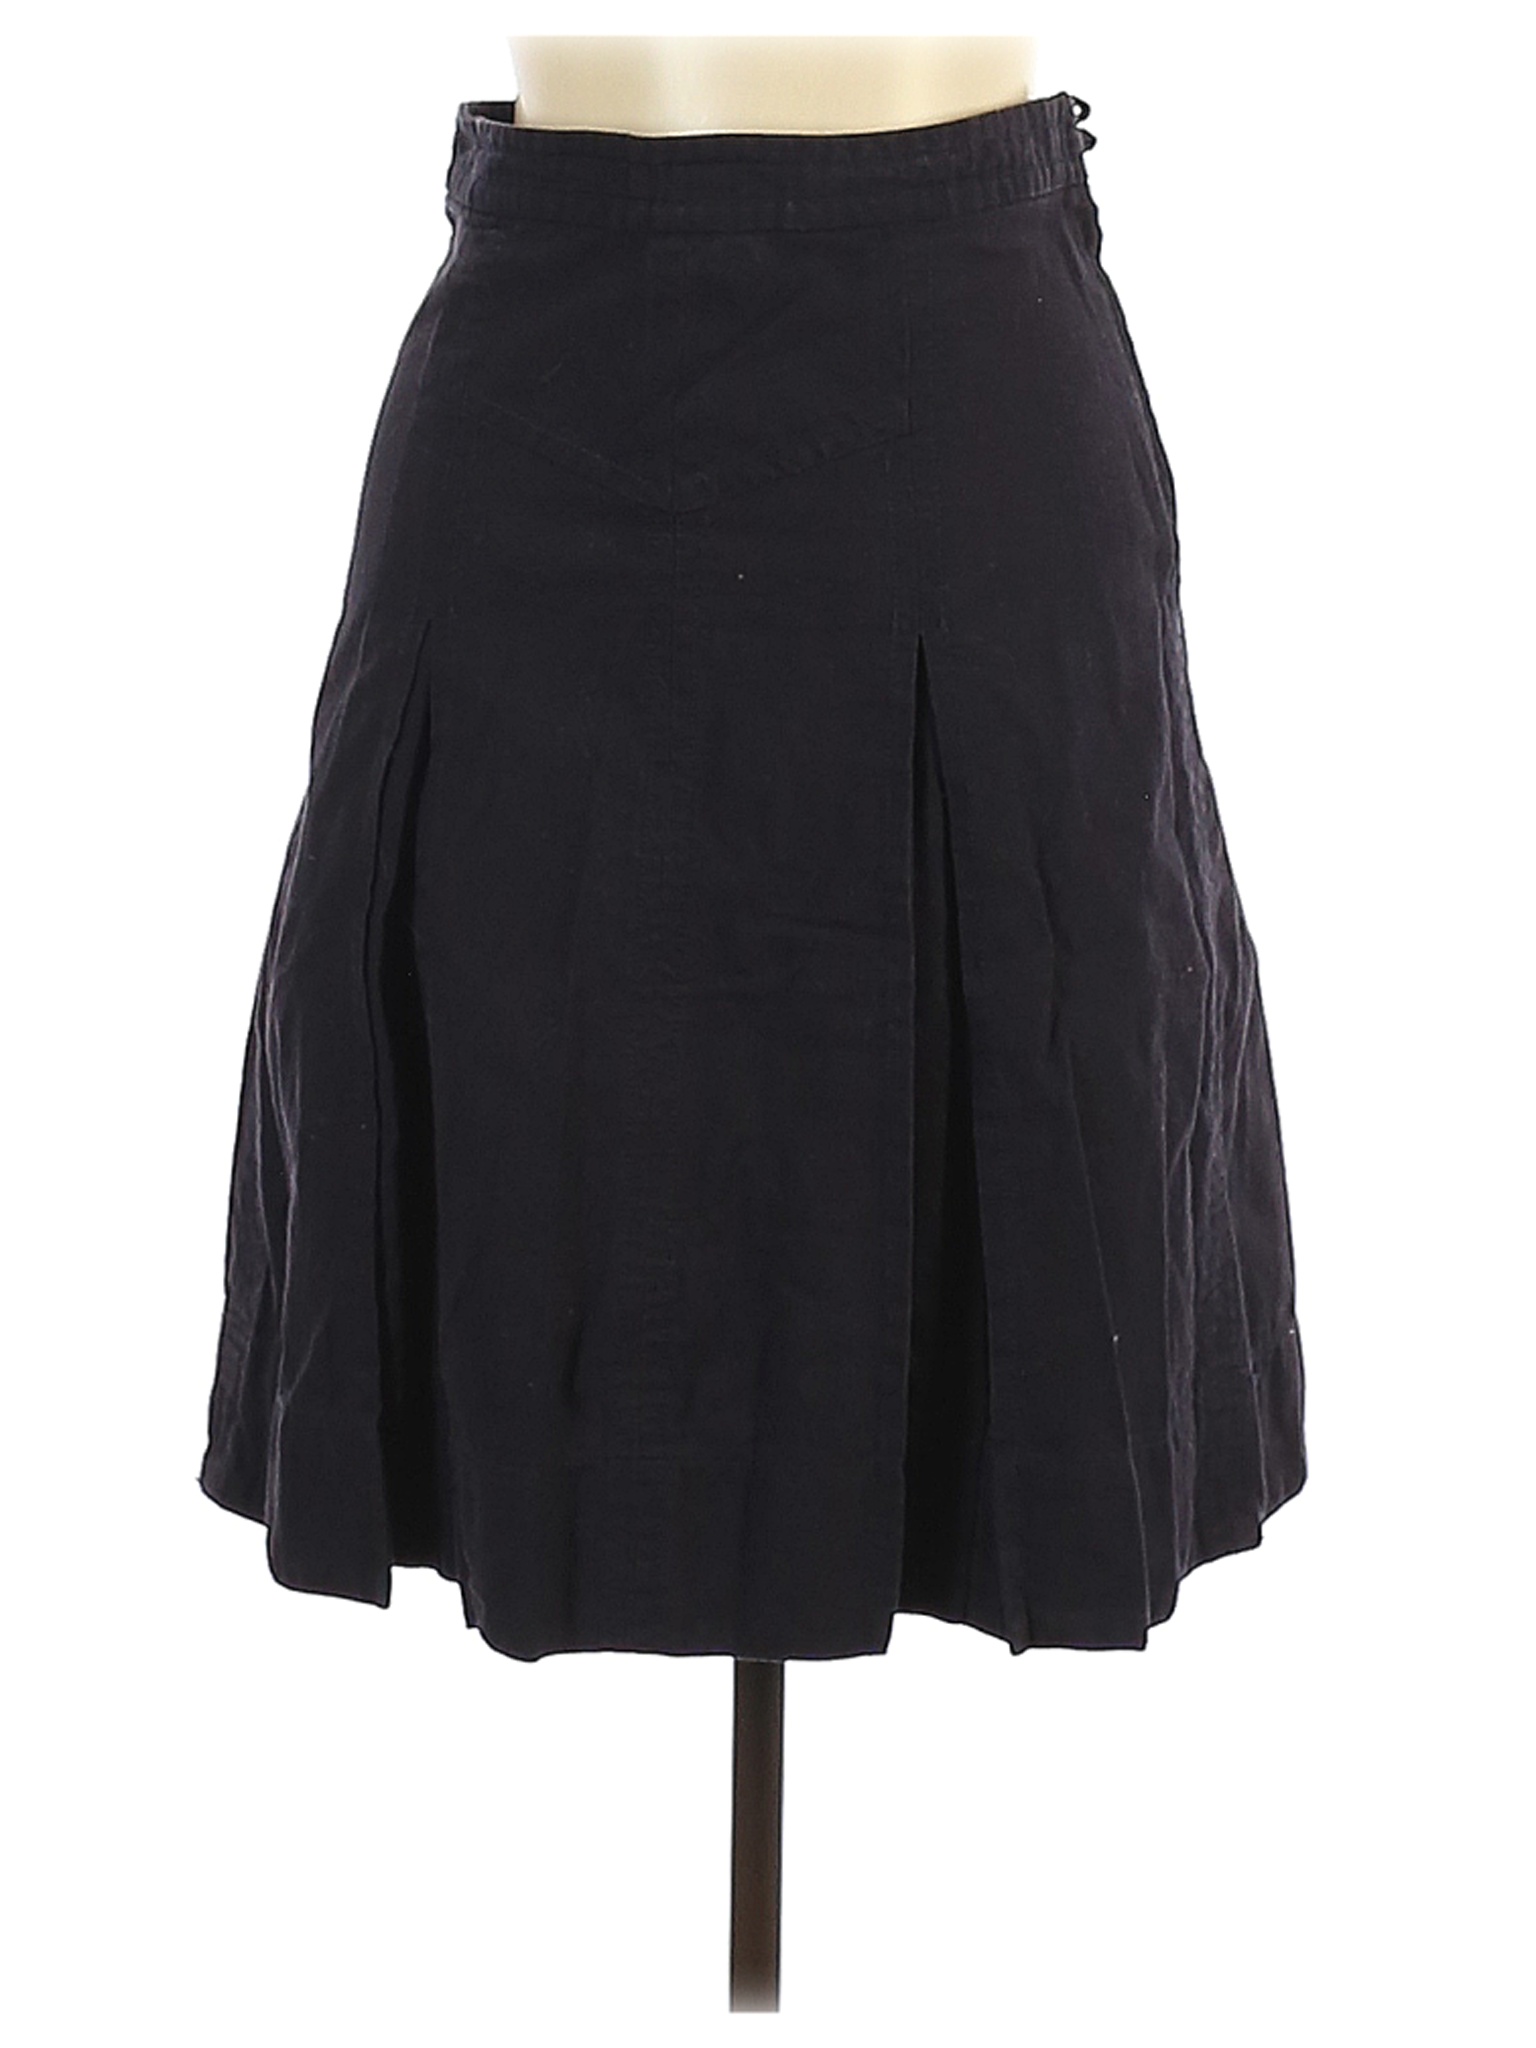 Marc by Marc Jacobs Women Black Casual Skirt 4 | eBay